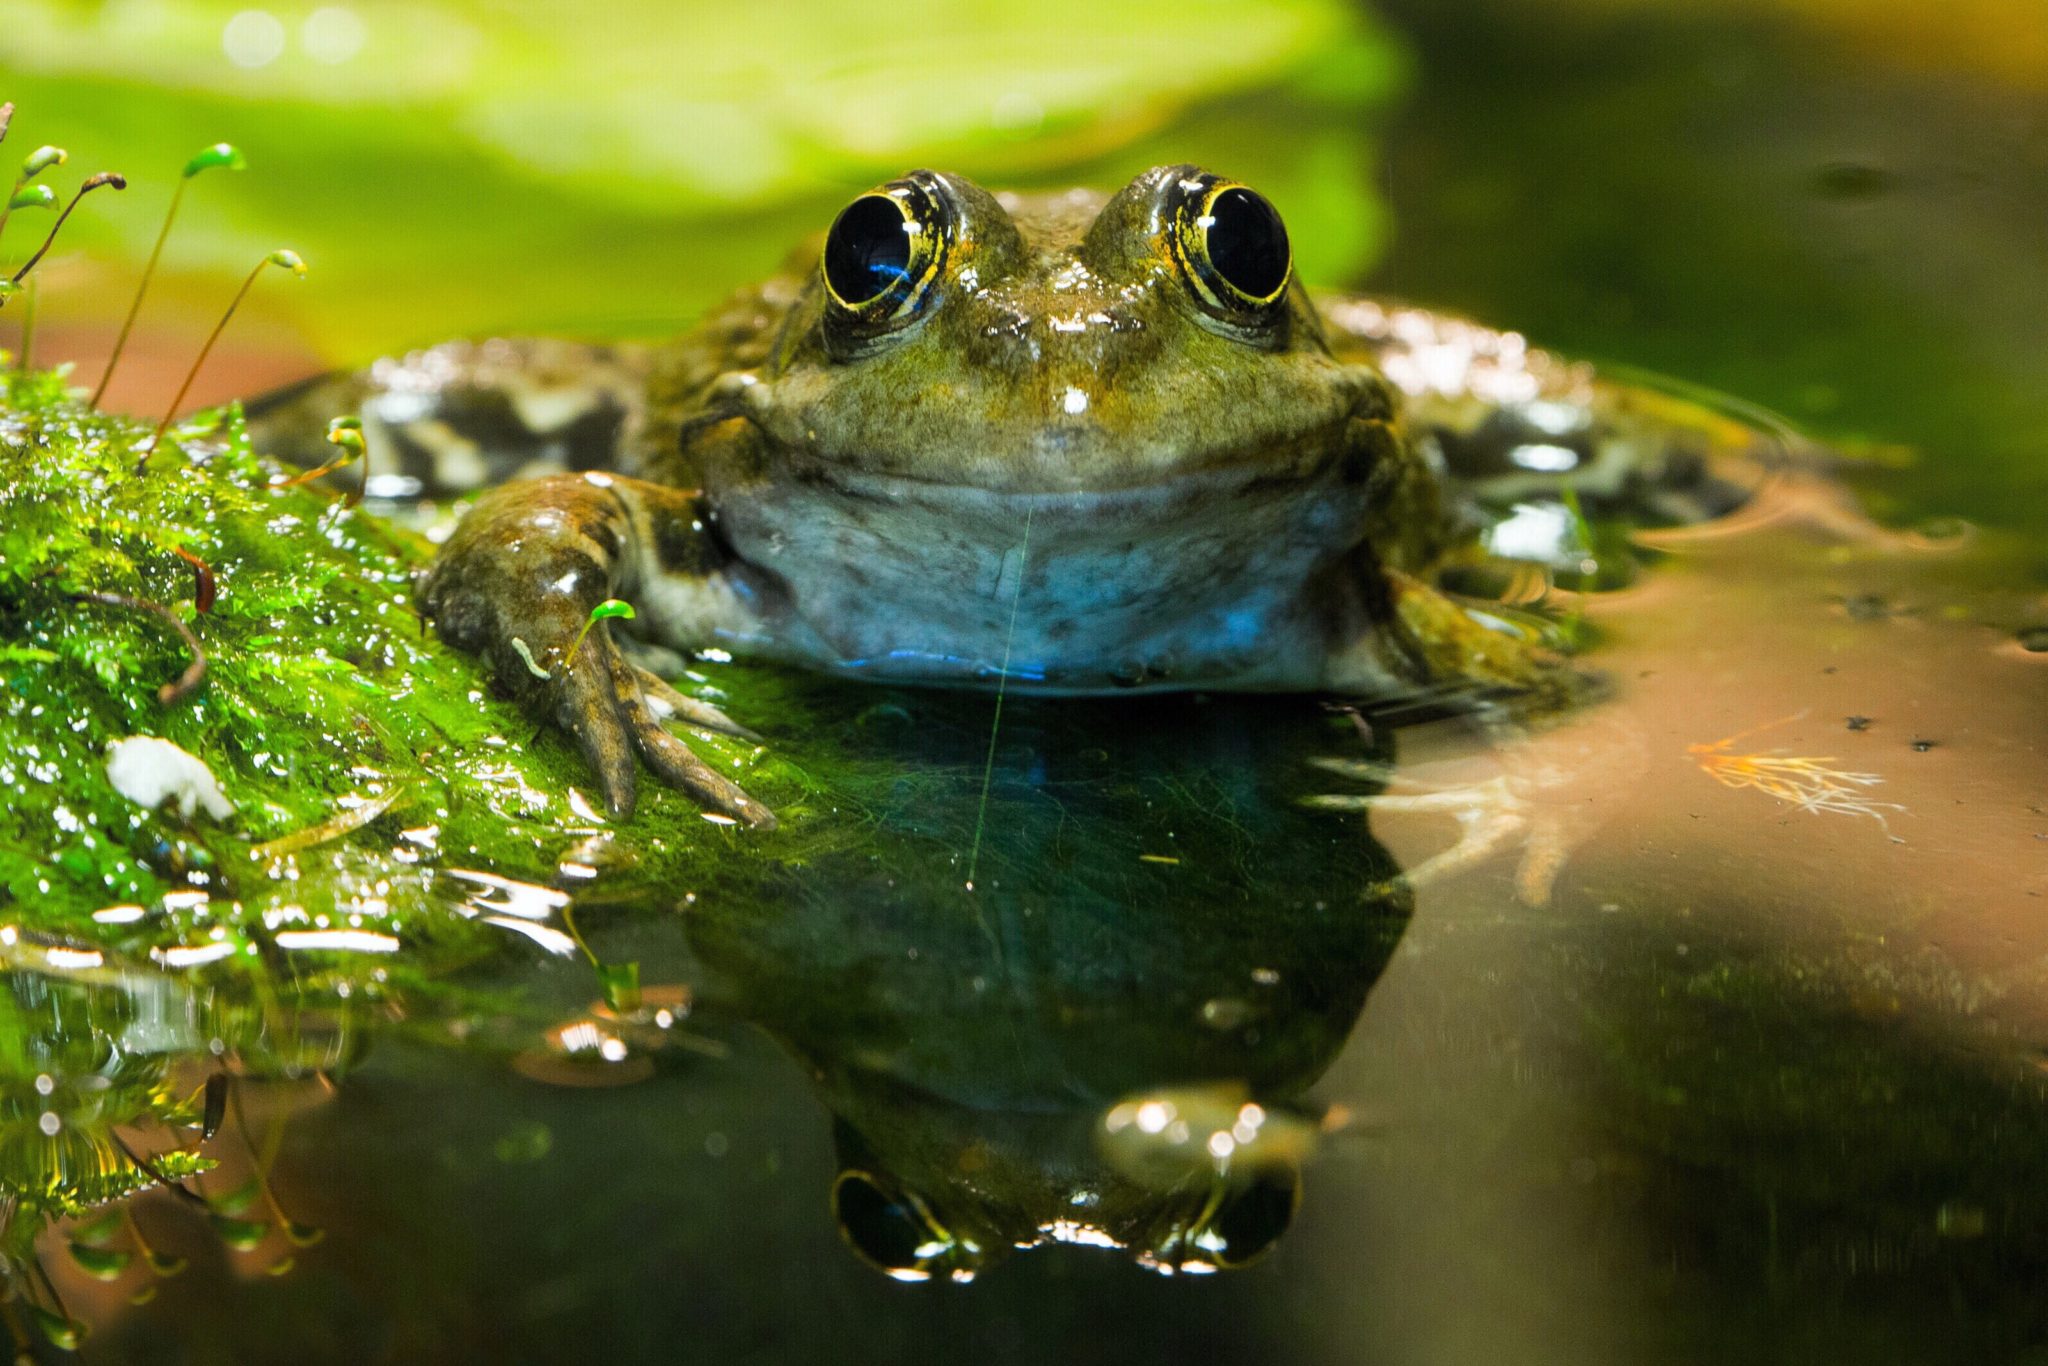 Waterfrog pond near Innsbruck May 2016